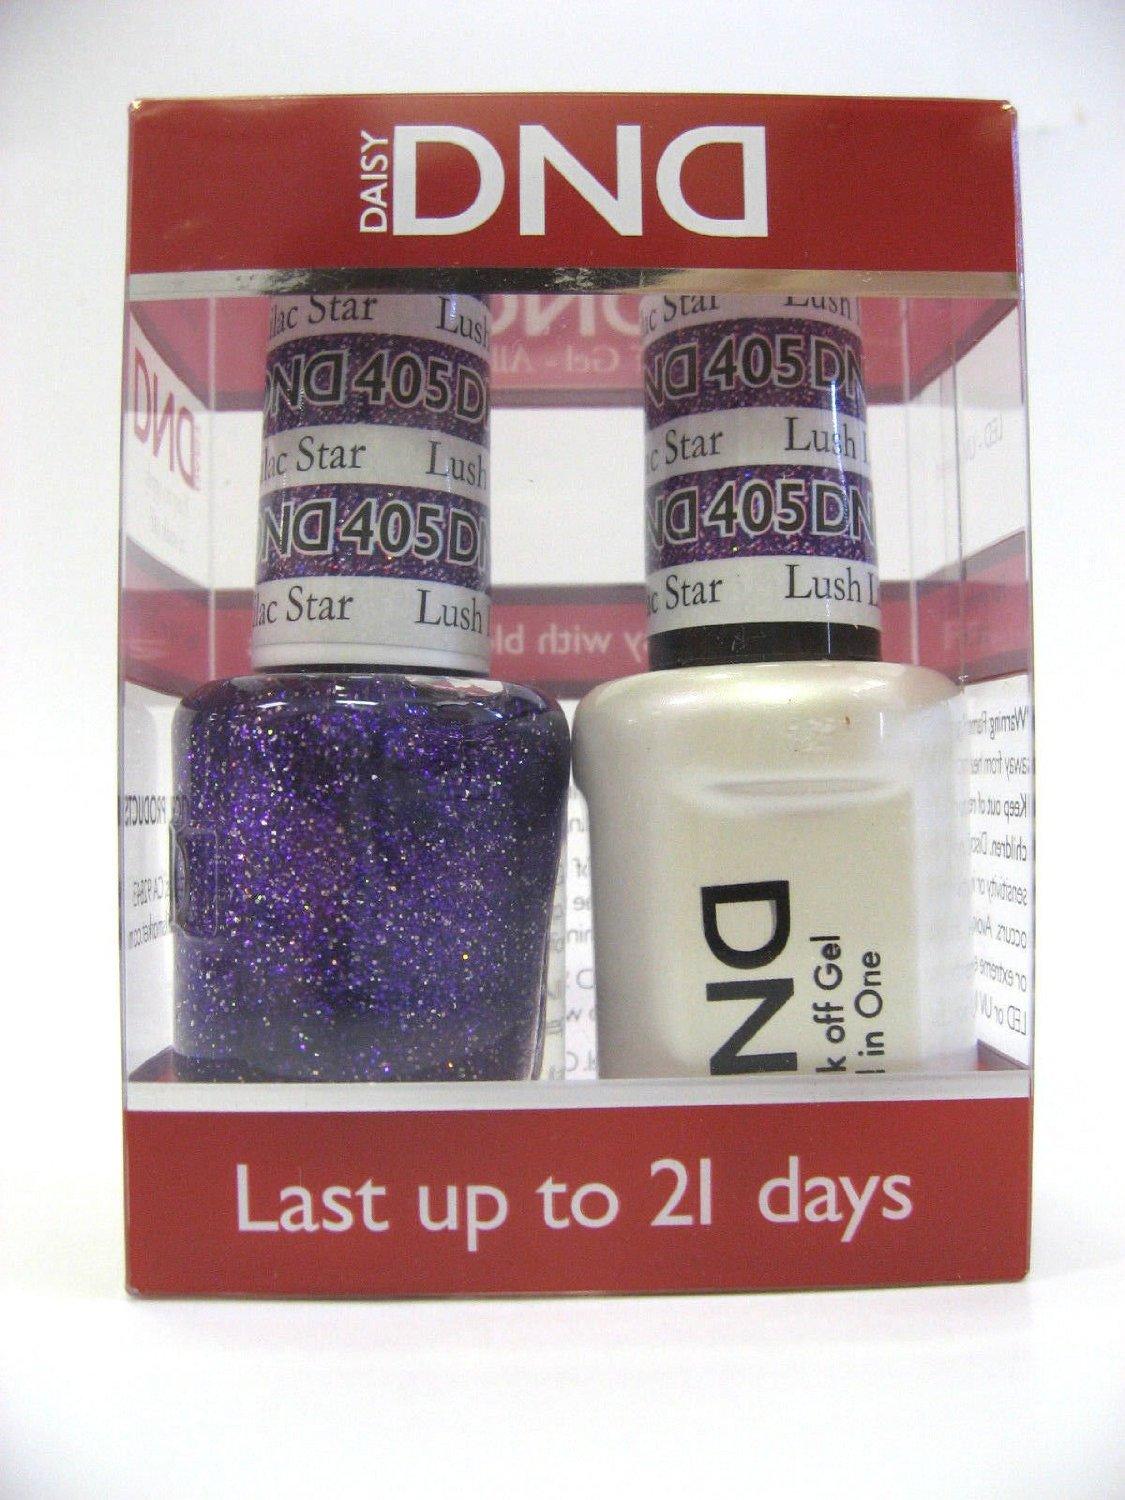 DND - Soak Off Gel Polish & Matching Nail Lacquer Set - #405 LUSH LILAC STAR